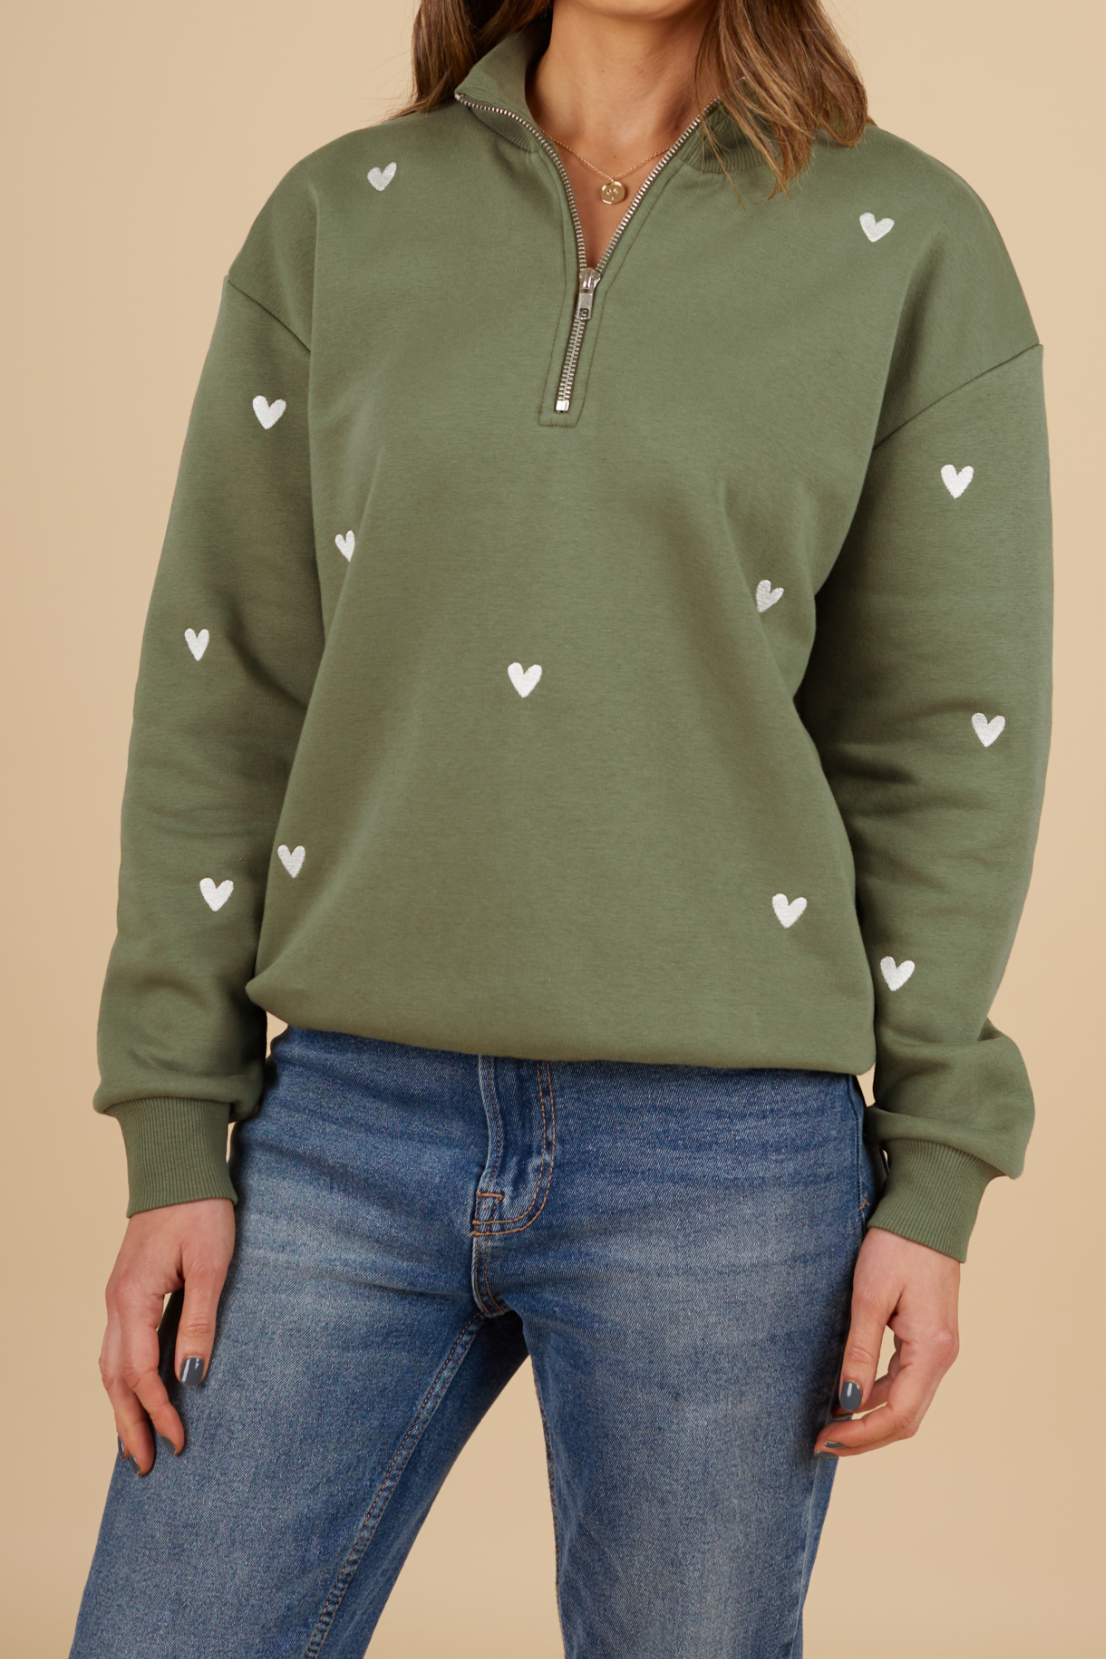 O&F Olive Heart Embroidered Half Zip Sweatshirt